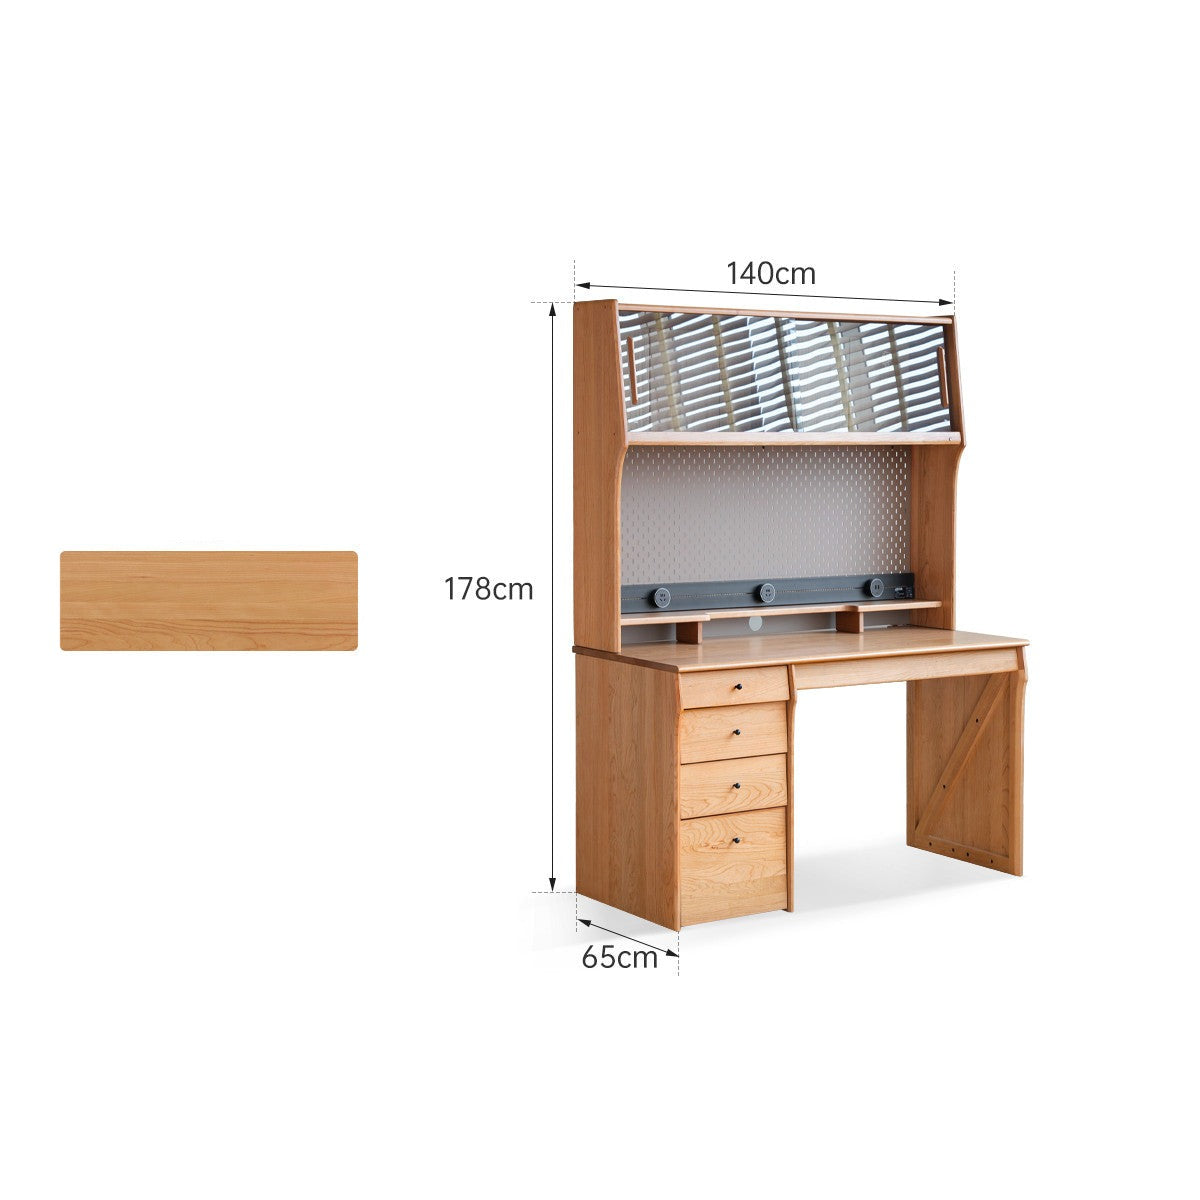 Oak solid wood desk bookshelf integrated Warm light-